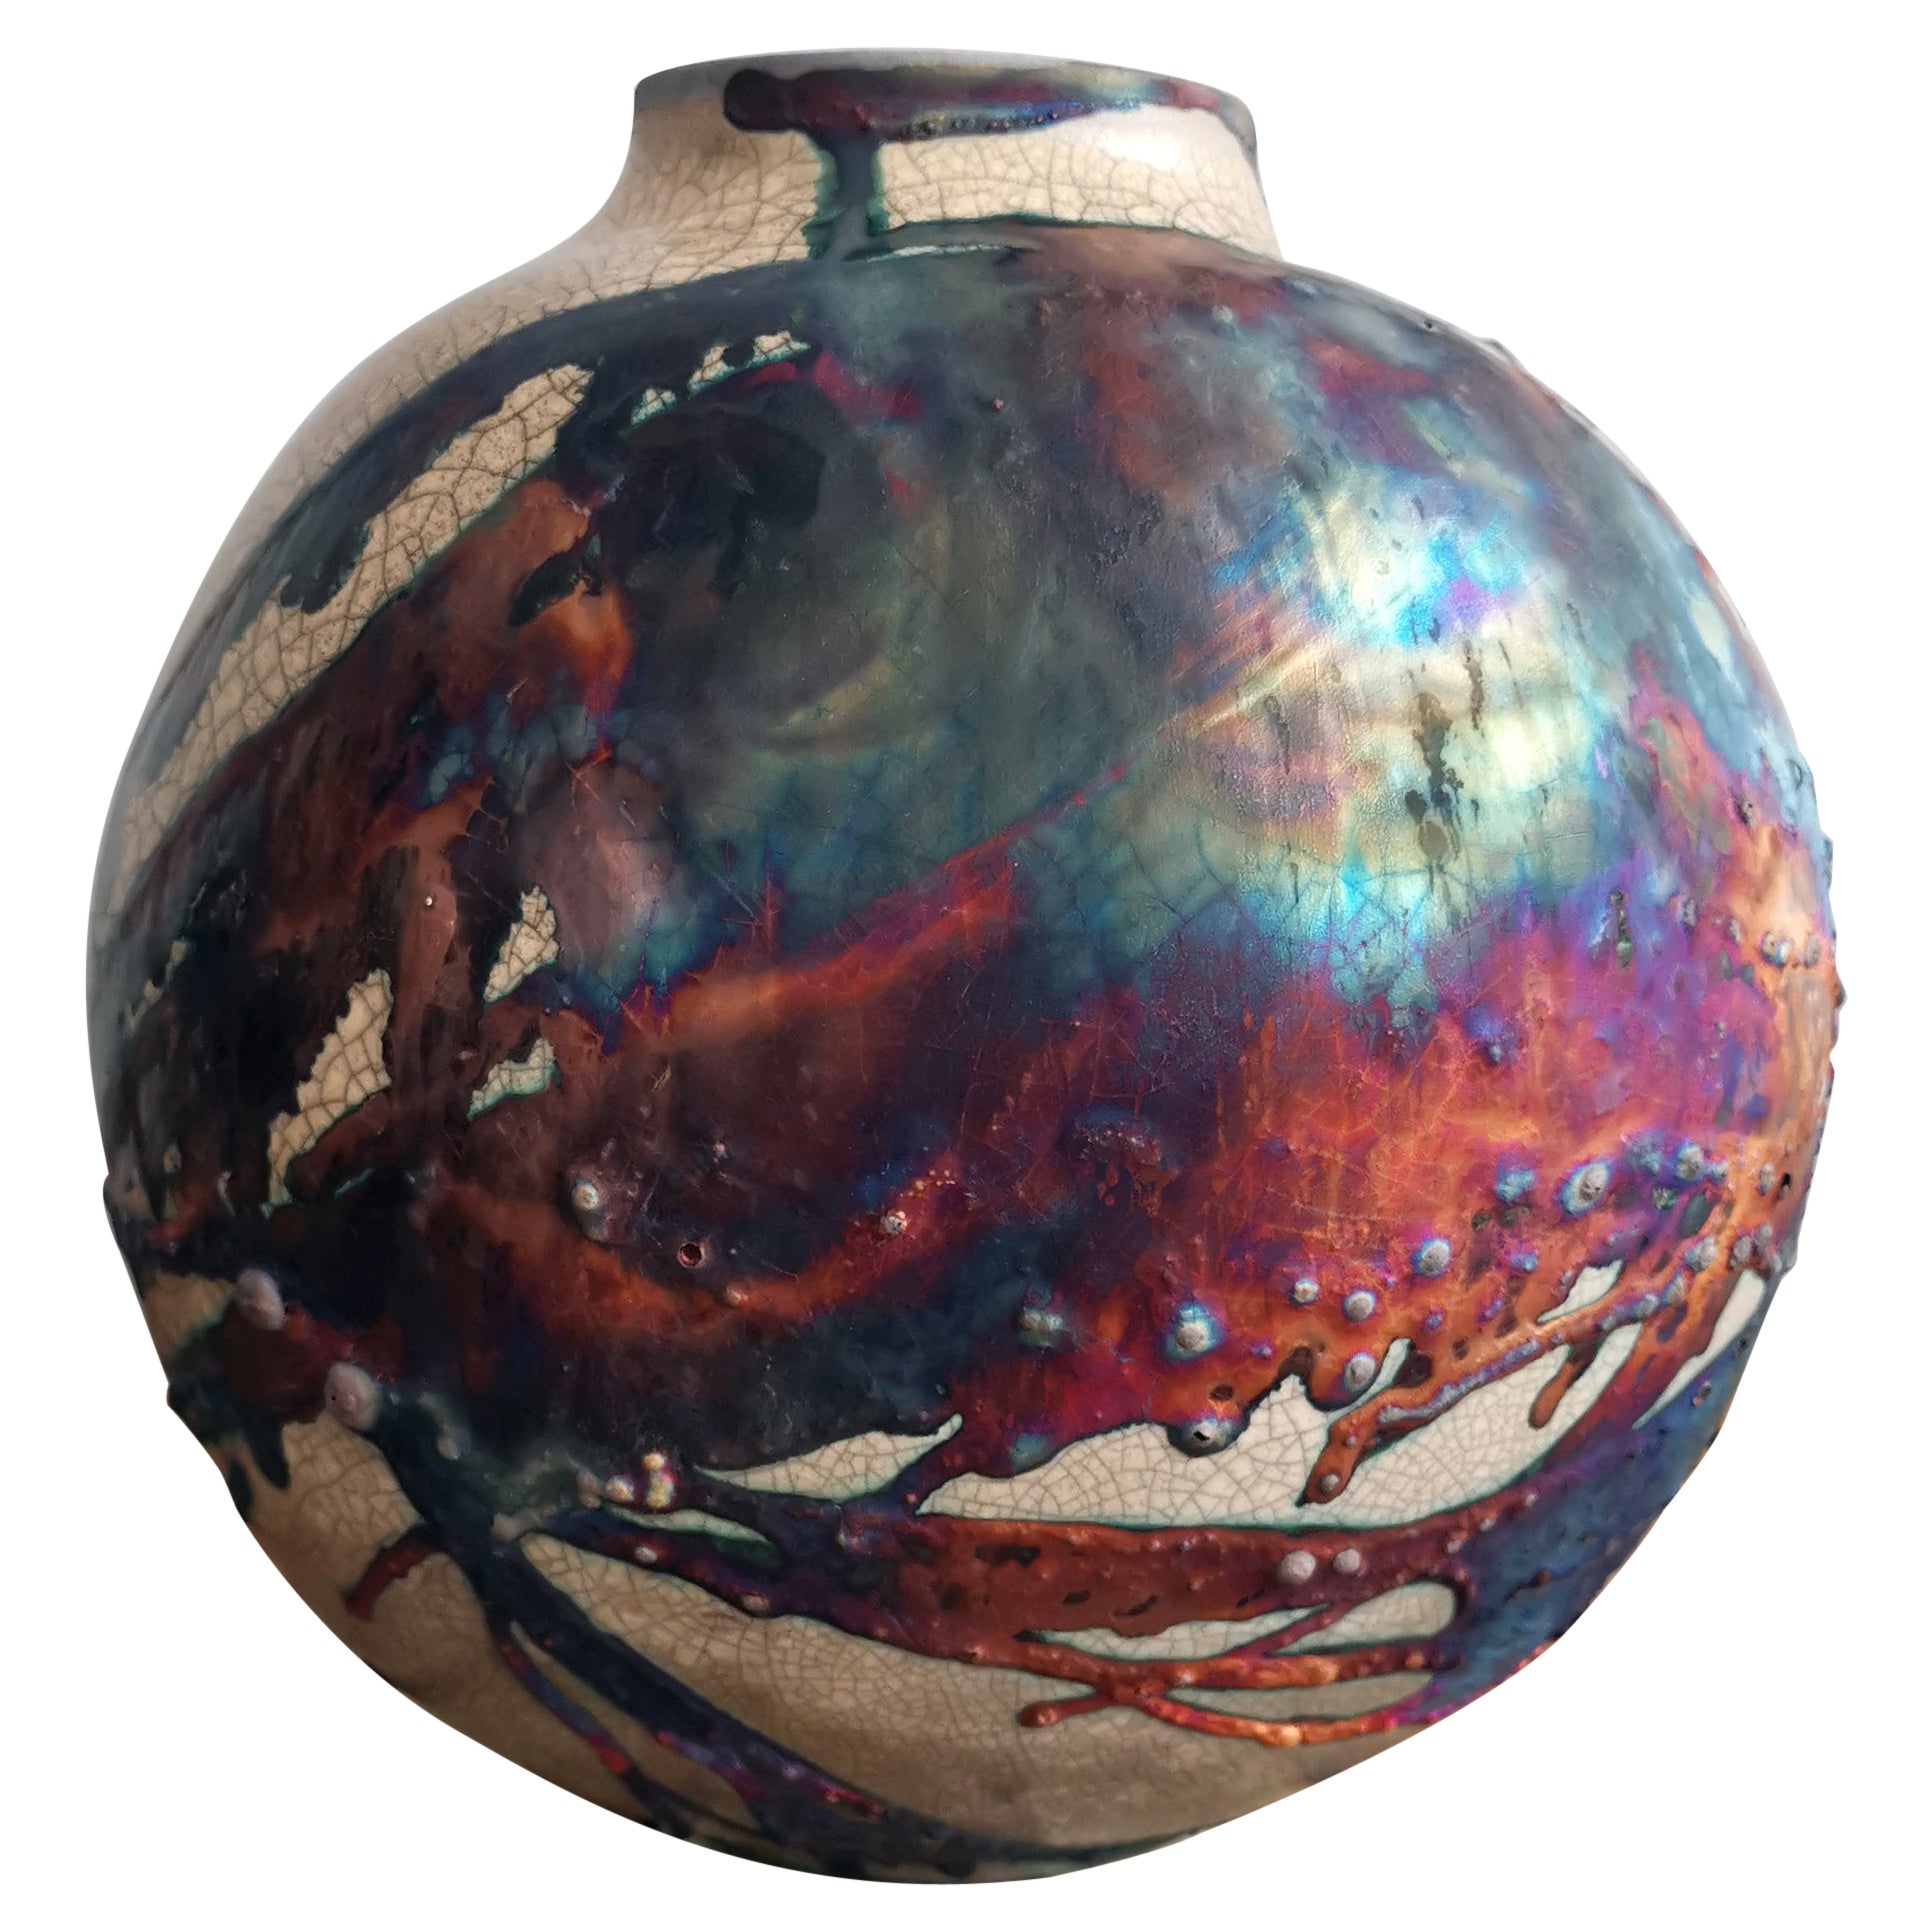 Raaquu Raku Fired Large Globe Vase S/N0000570 Centerpiece Art Series